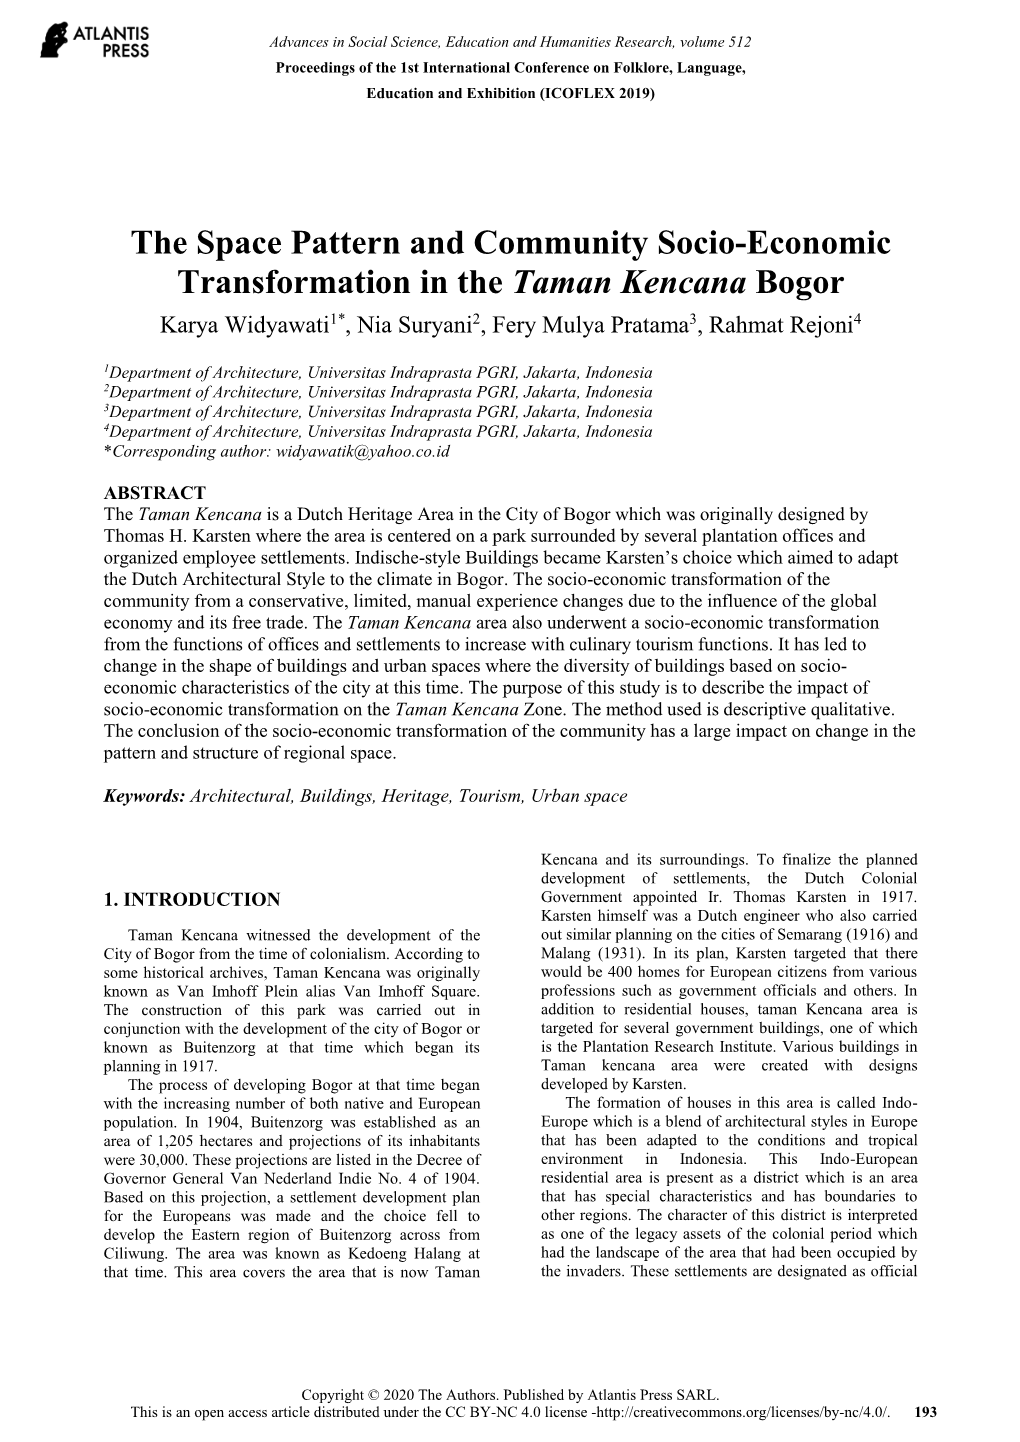 The Space Pattern and Community Socio-Economic Transformation in the Taman Kencana Bogor Karya Widyawati1*, Nia Suryani2, Fery Mulya Pratama3, Rahmat Rejoni4